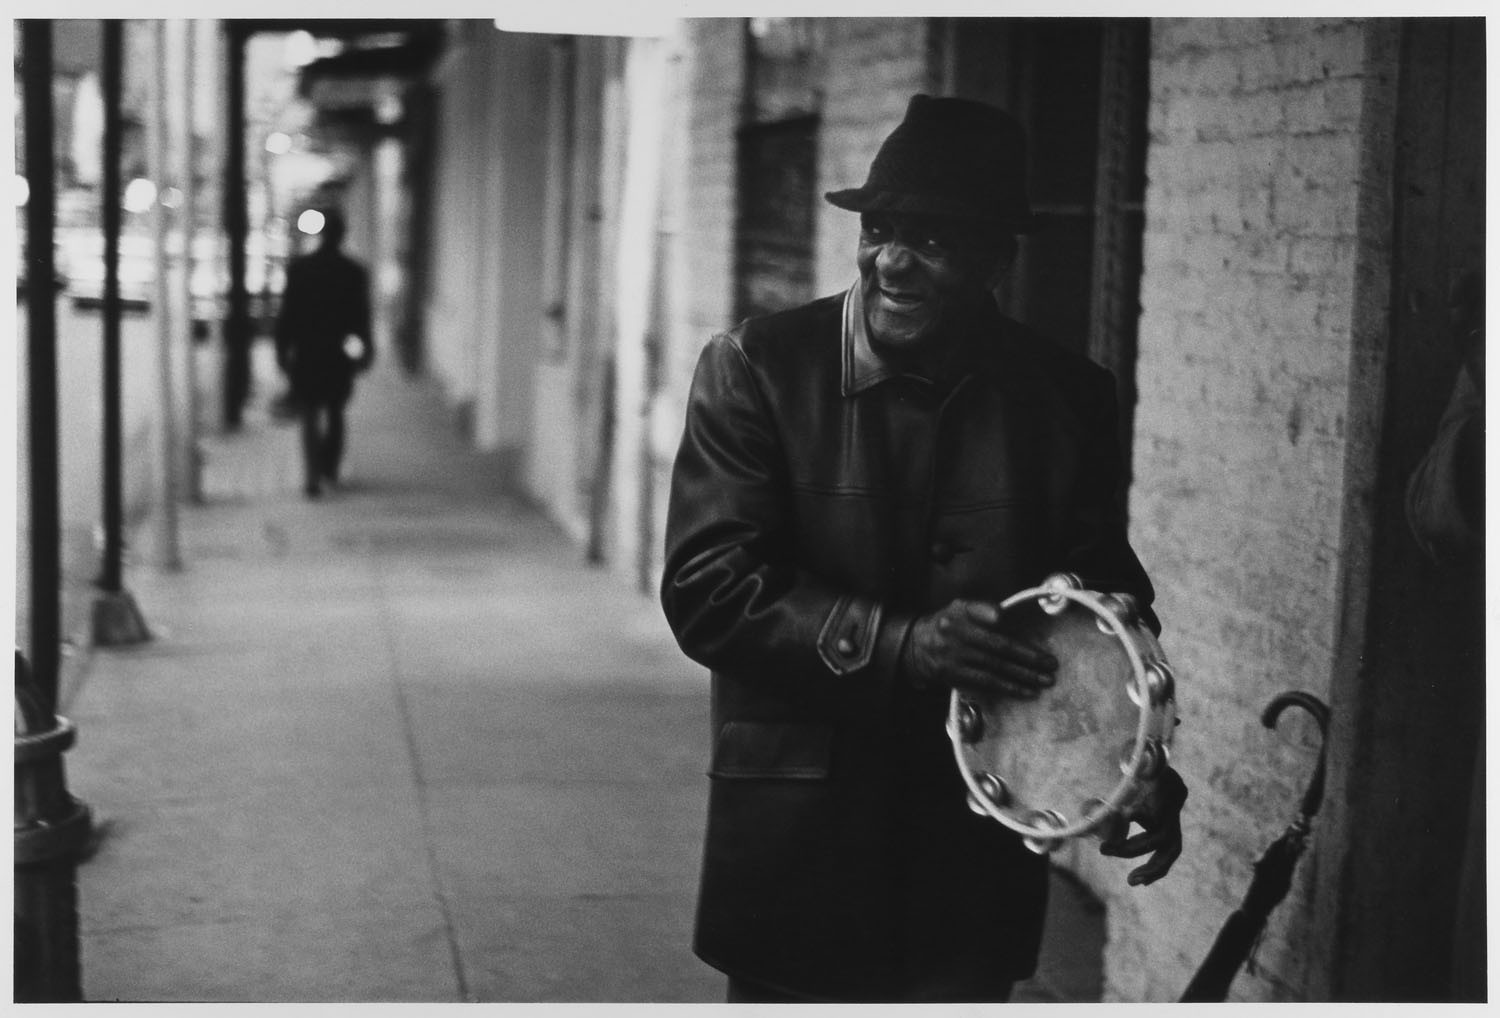 Тамборист, Новый Орлеан, Лос-Анджелес, 1965. Фотограф Леонард Фрид